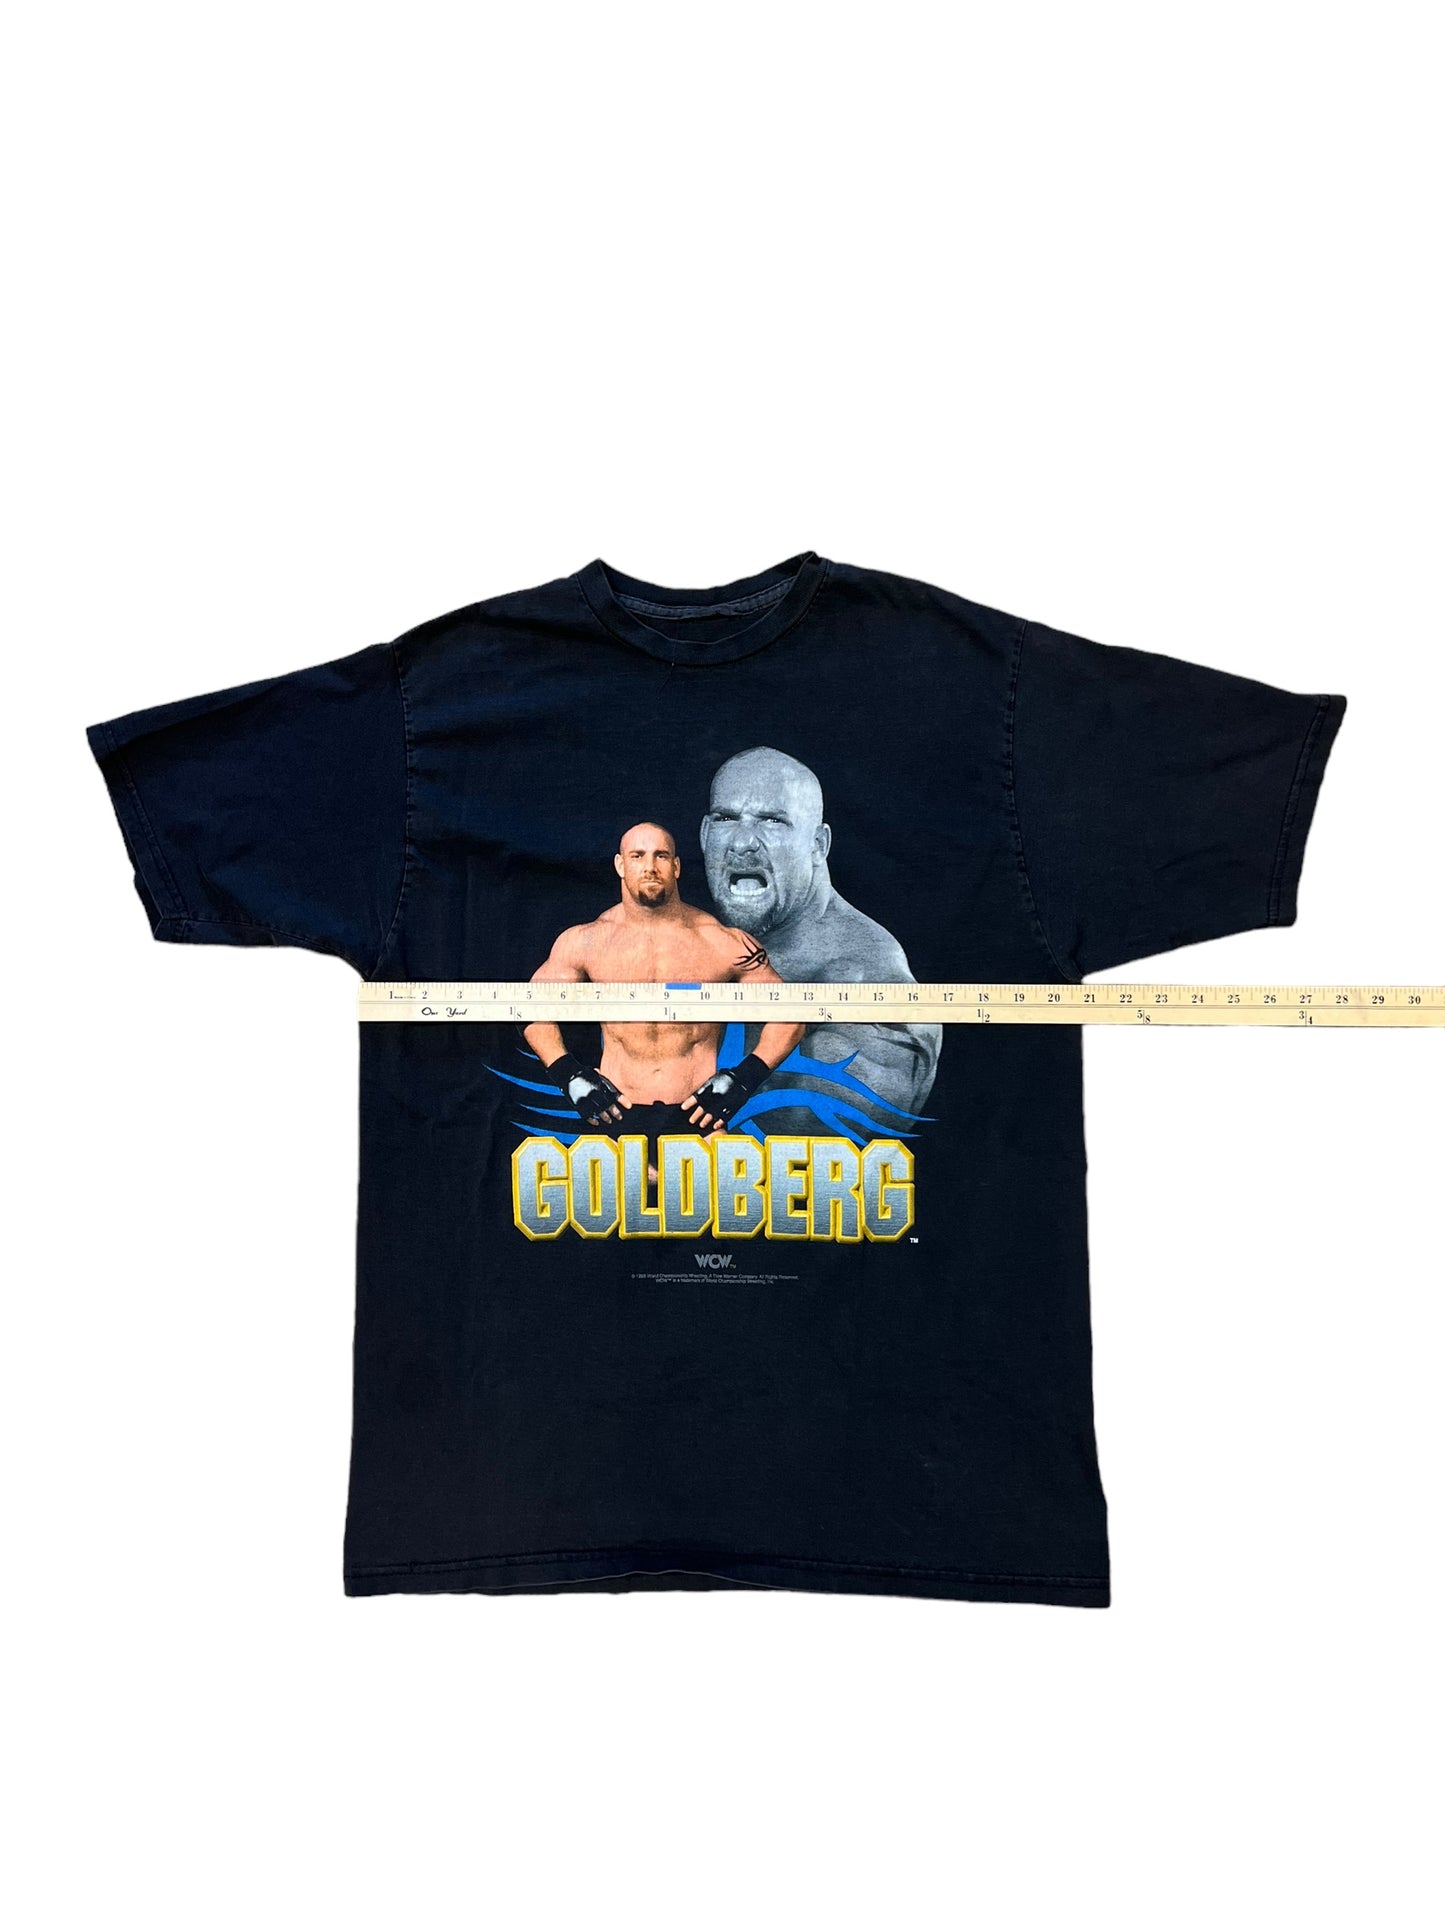 Vintage Goldberg WCW Tee - Large